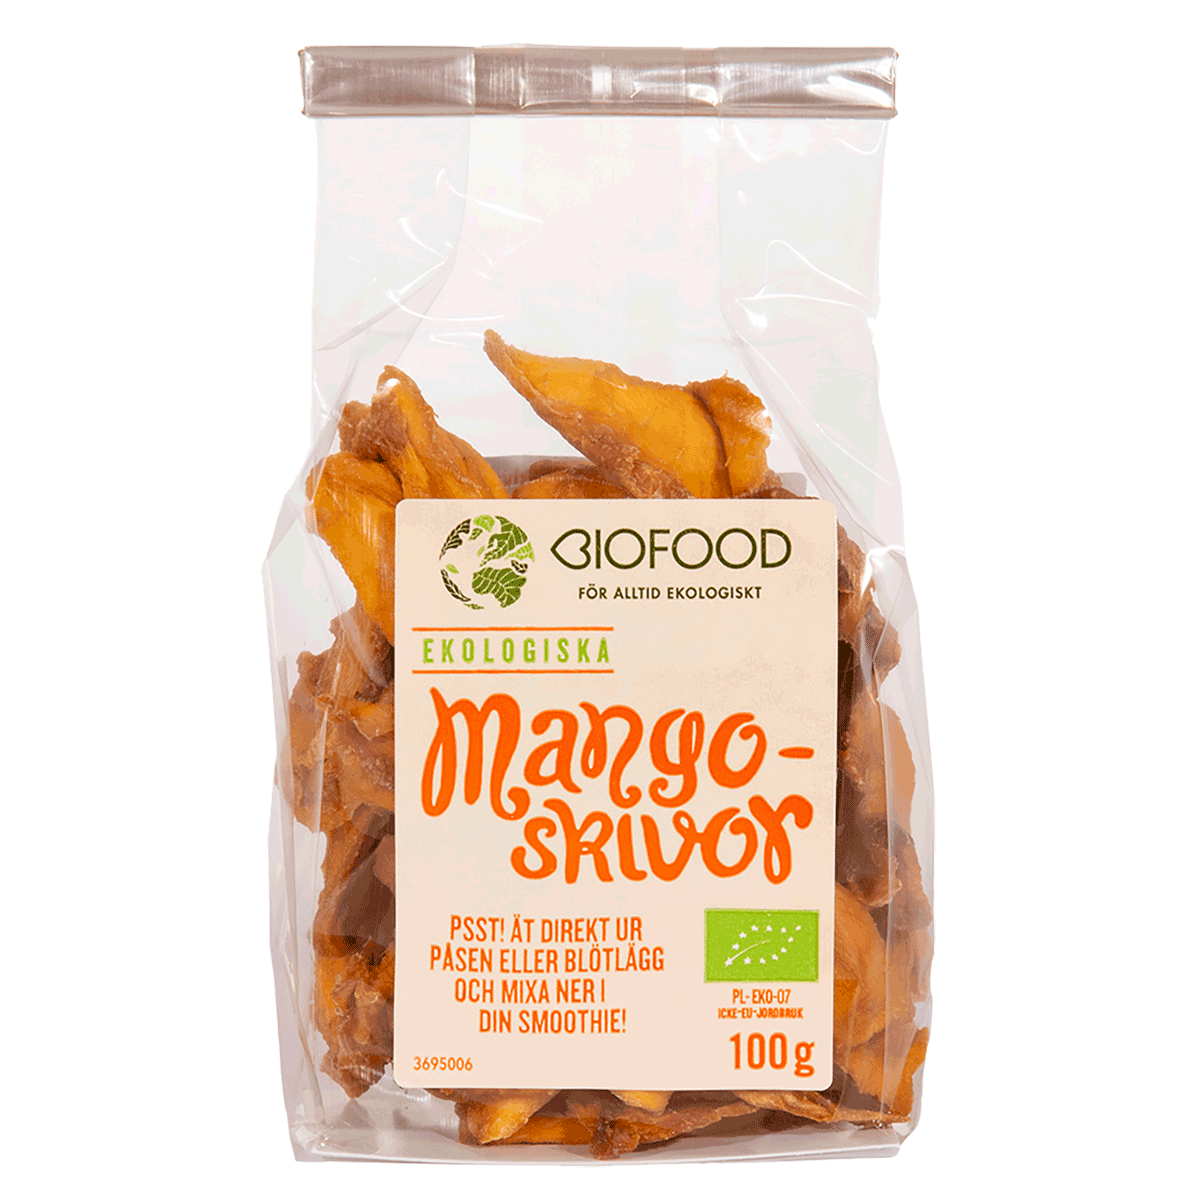 Biofood's Mango Slices Dried '